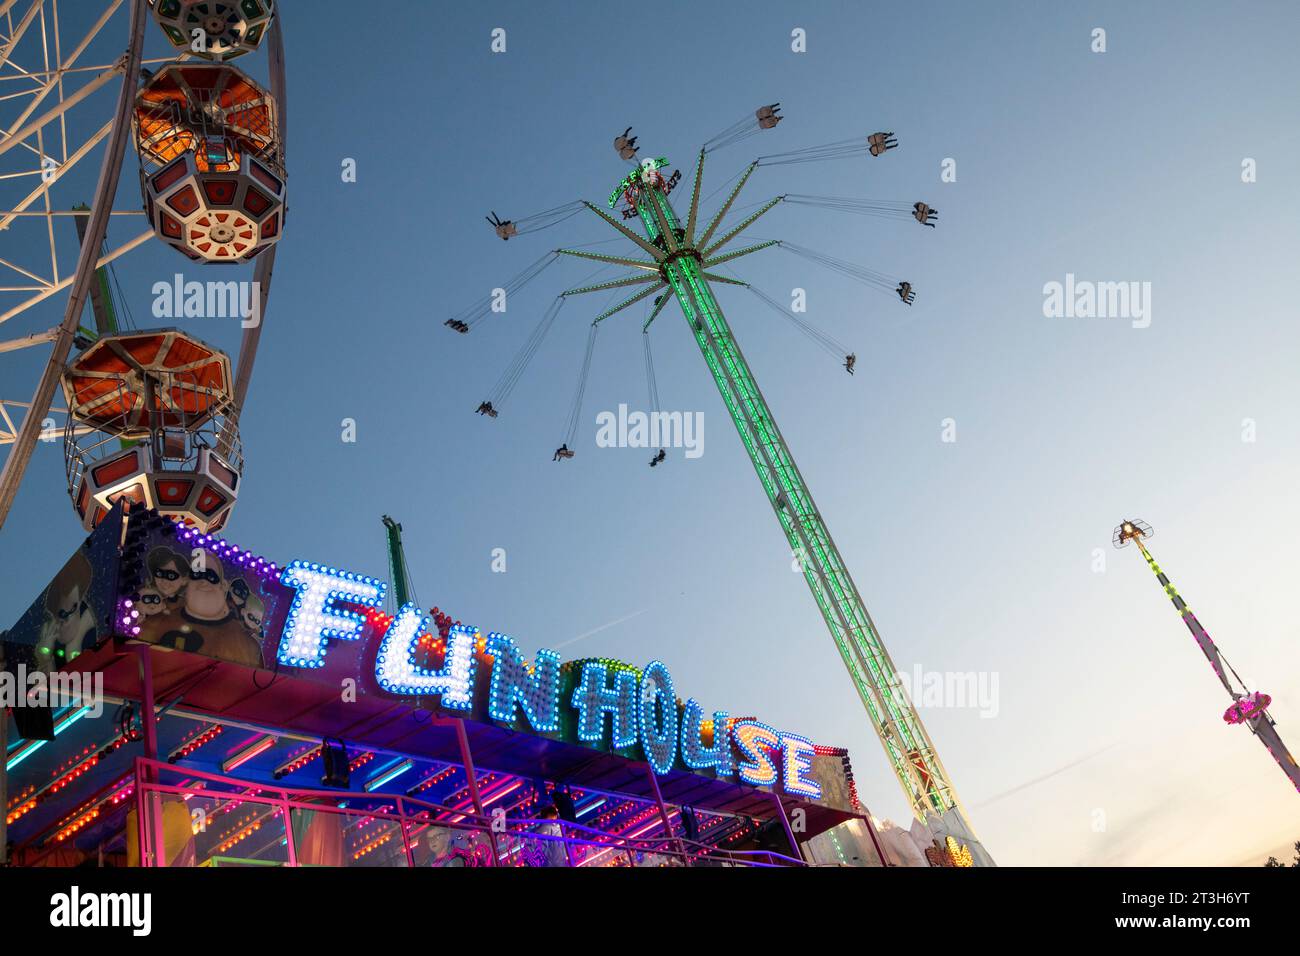 Am frühen Abend auf der Goose Fair, Nottingham Nottinghamshire England, Großbritannien Stockfoto